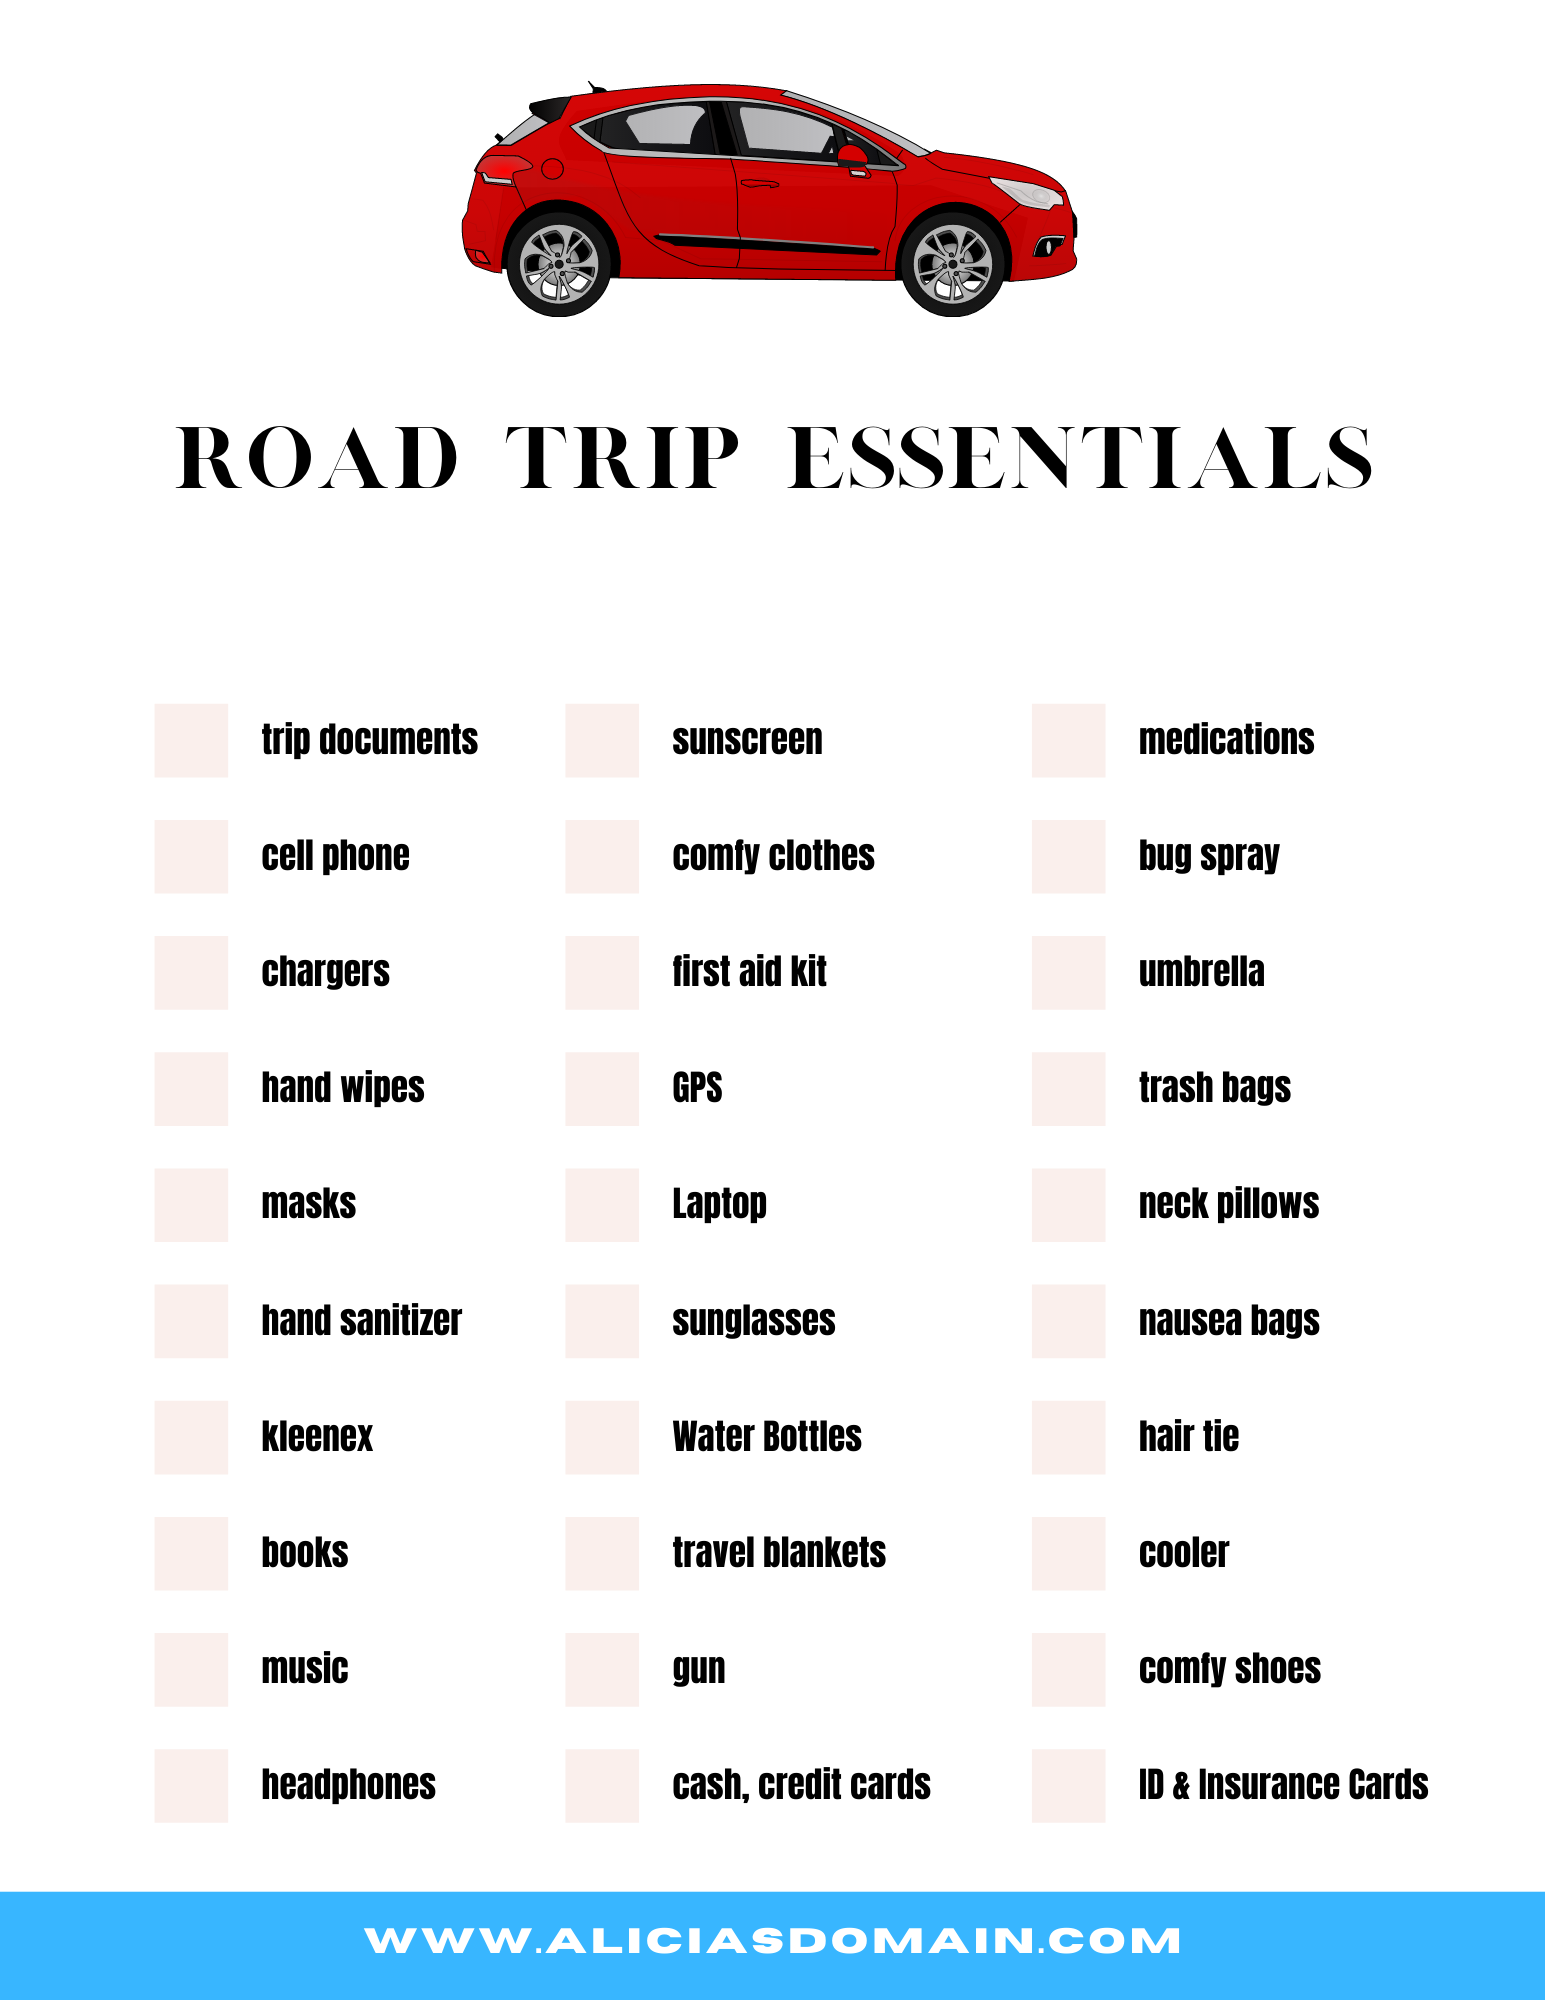 58 Road trip essentials ideas  road trip essentials, road trip